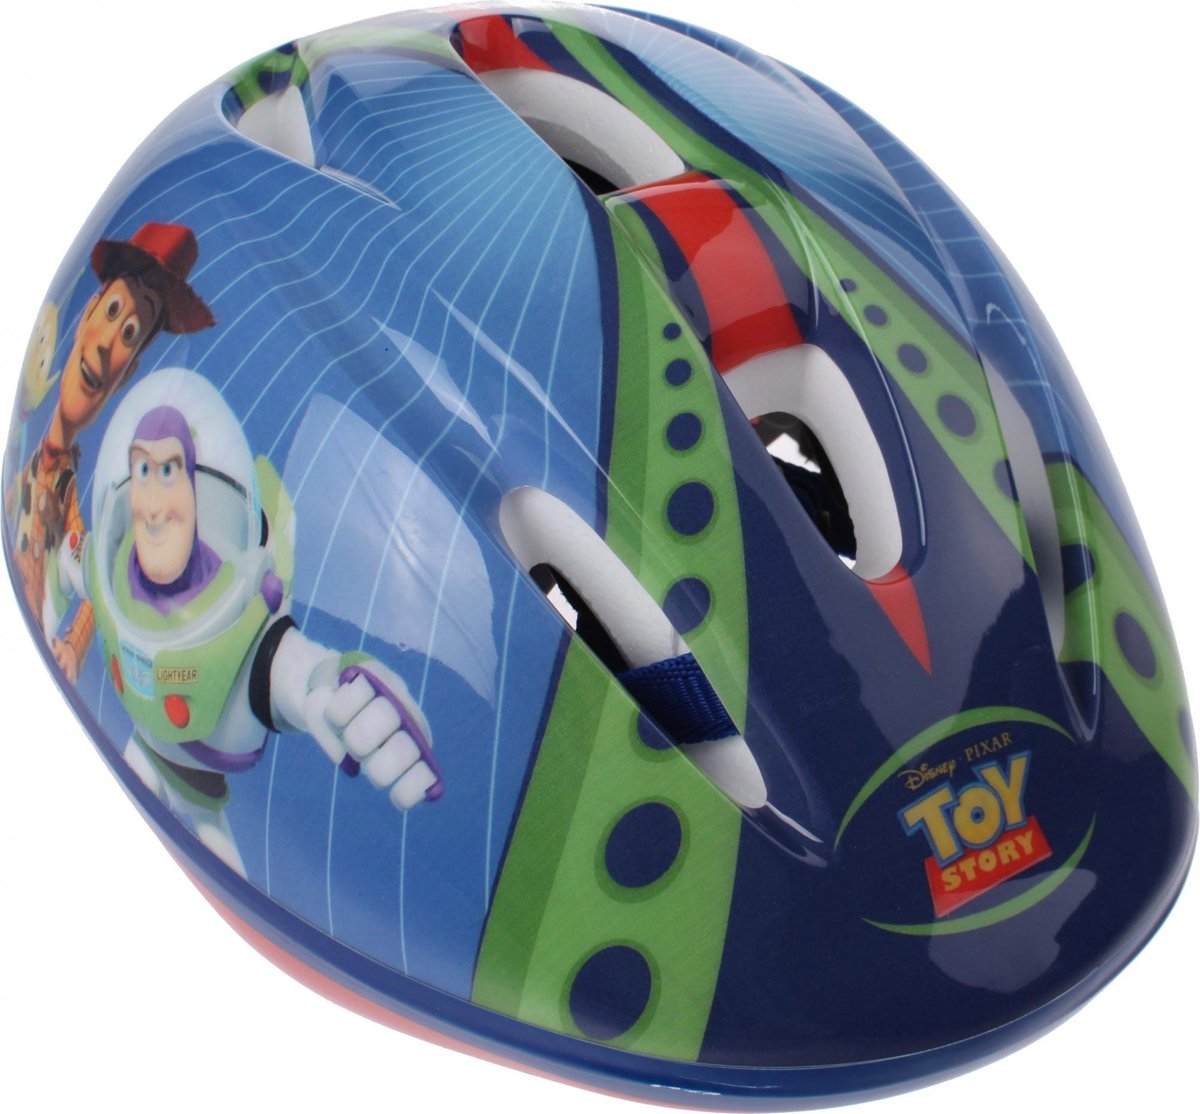 Toy Story Bike Helmet